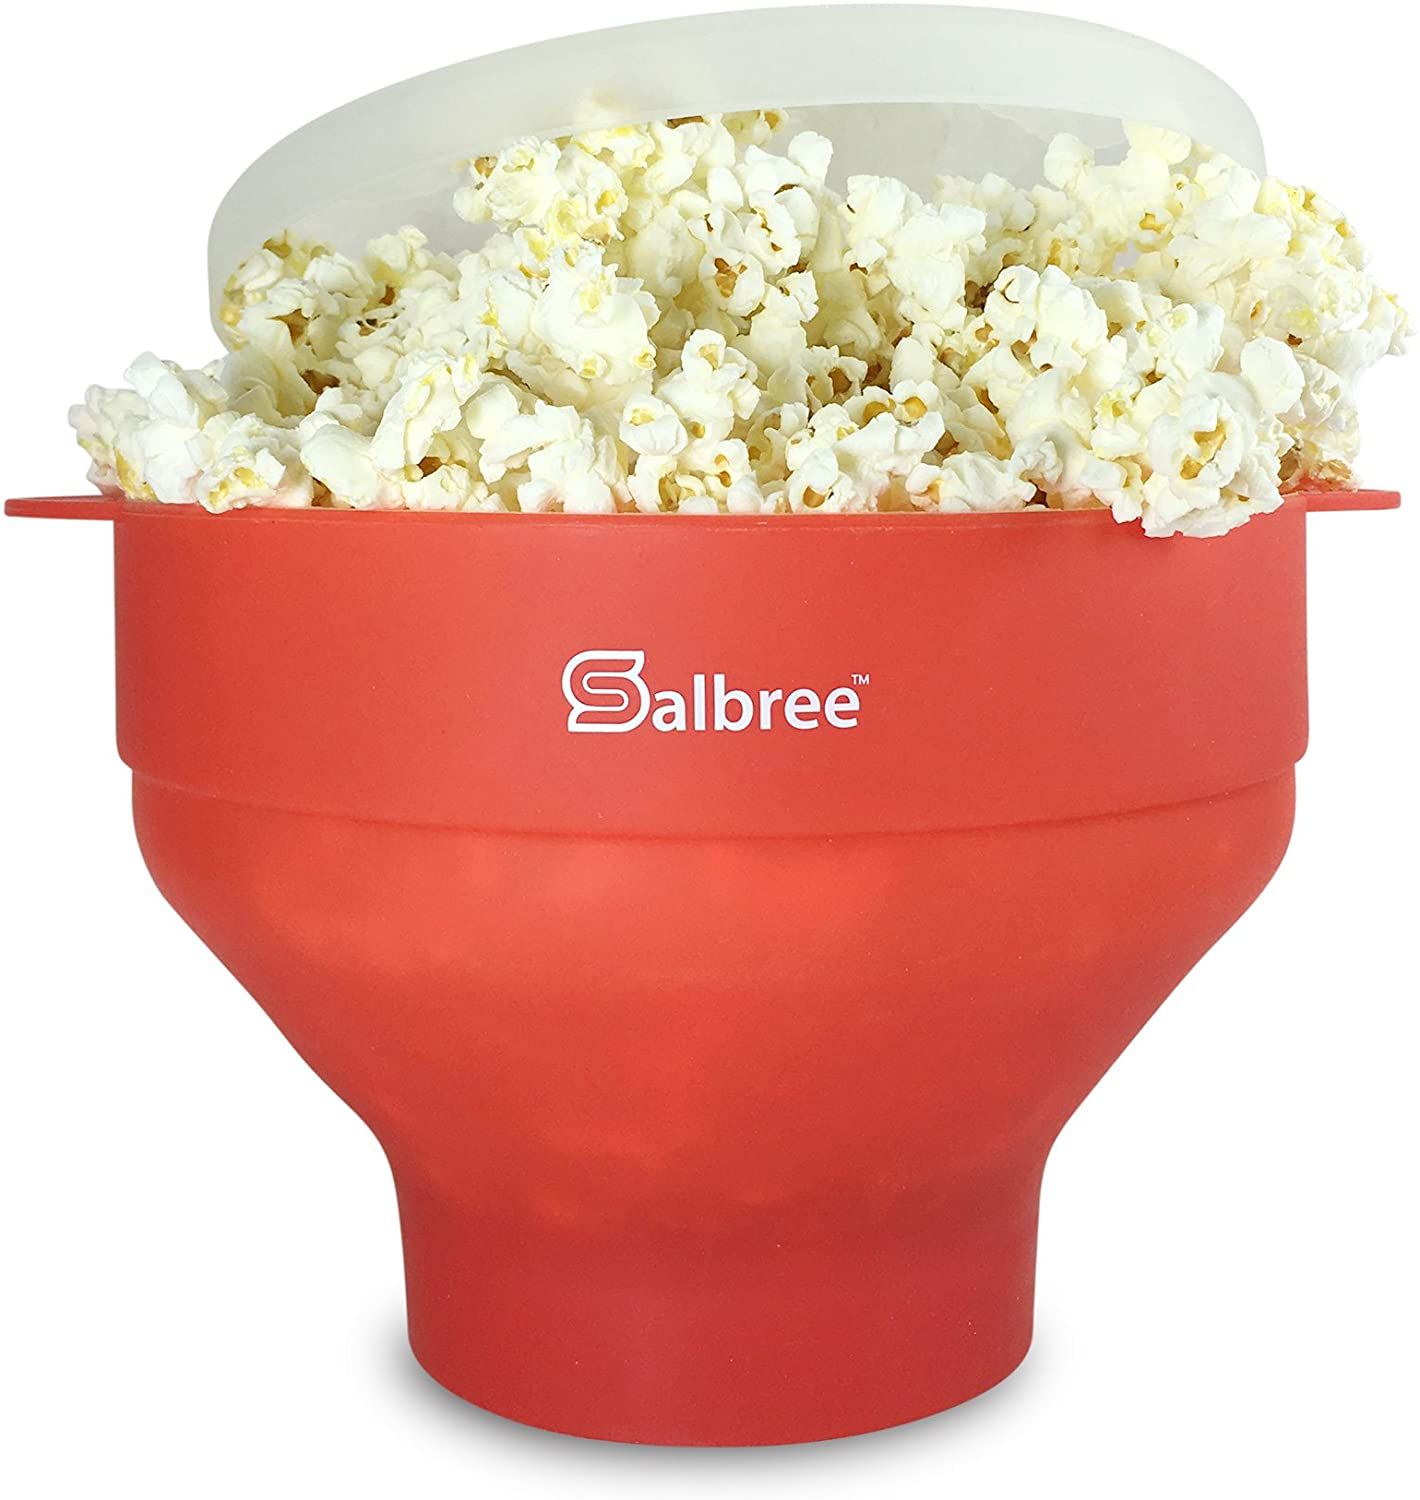 Salbree Original Microwave Popcorn Popper in red